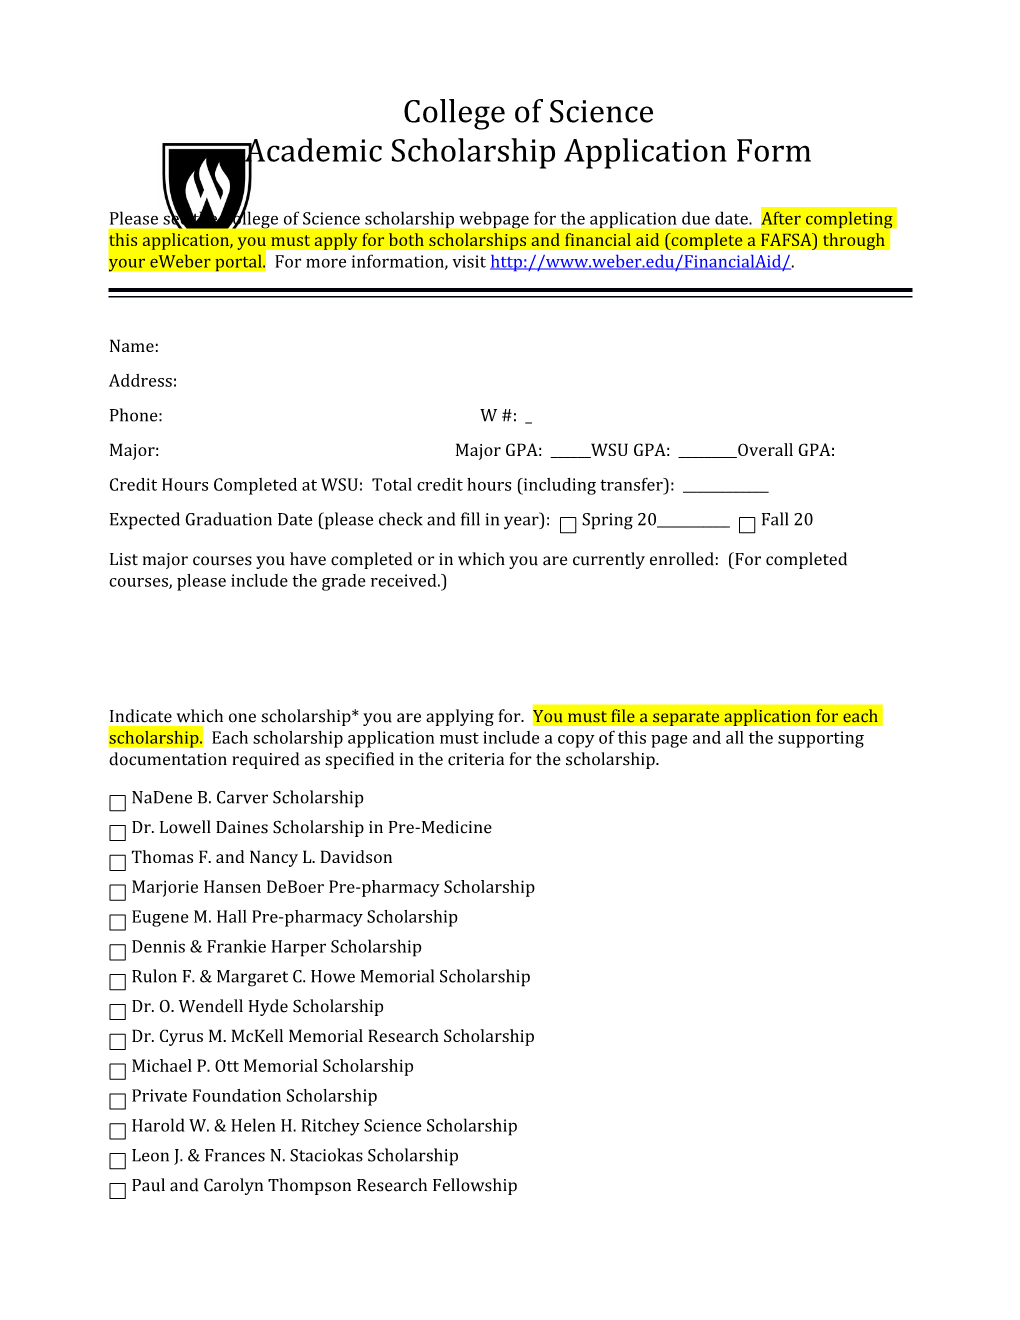 Academic Scholarship Application Form